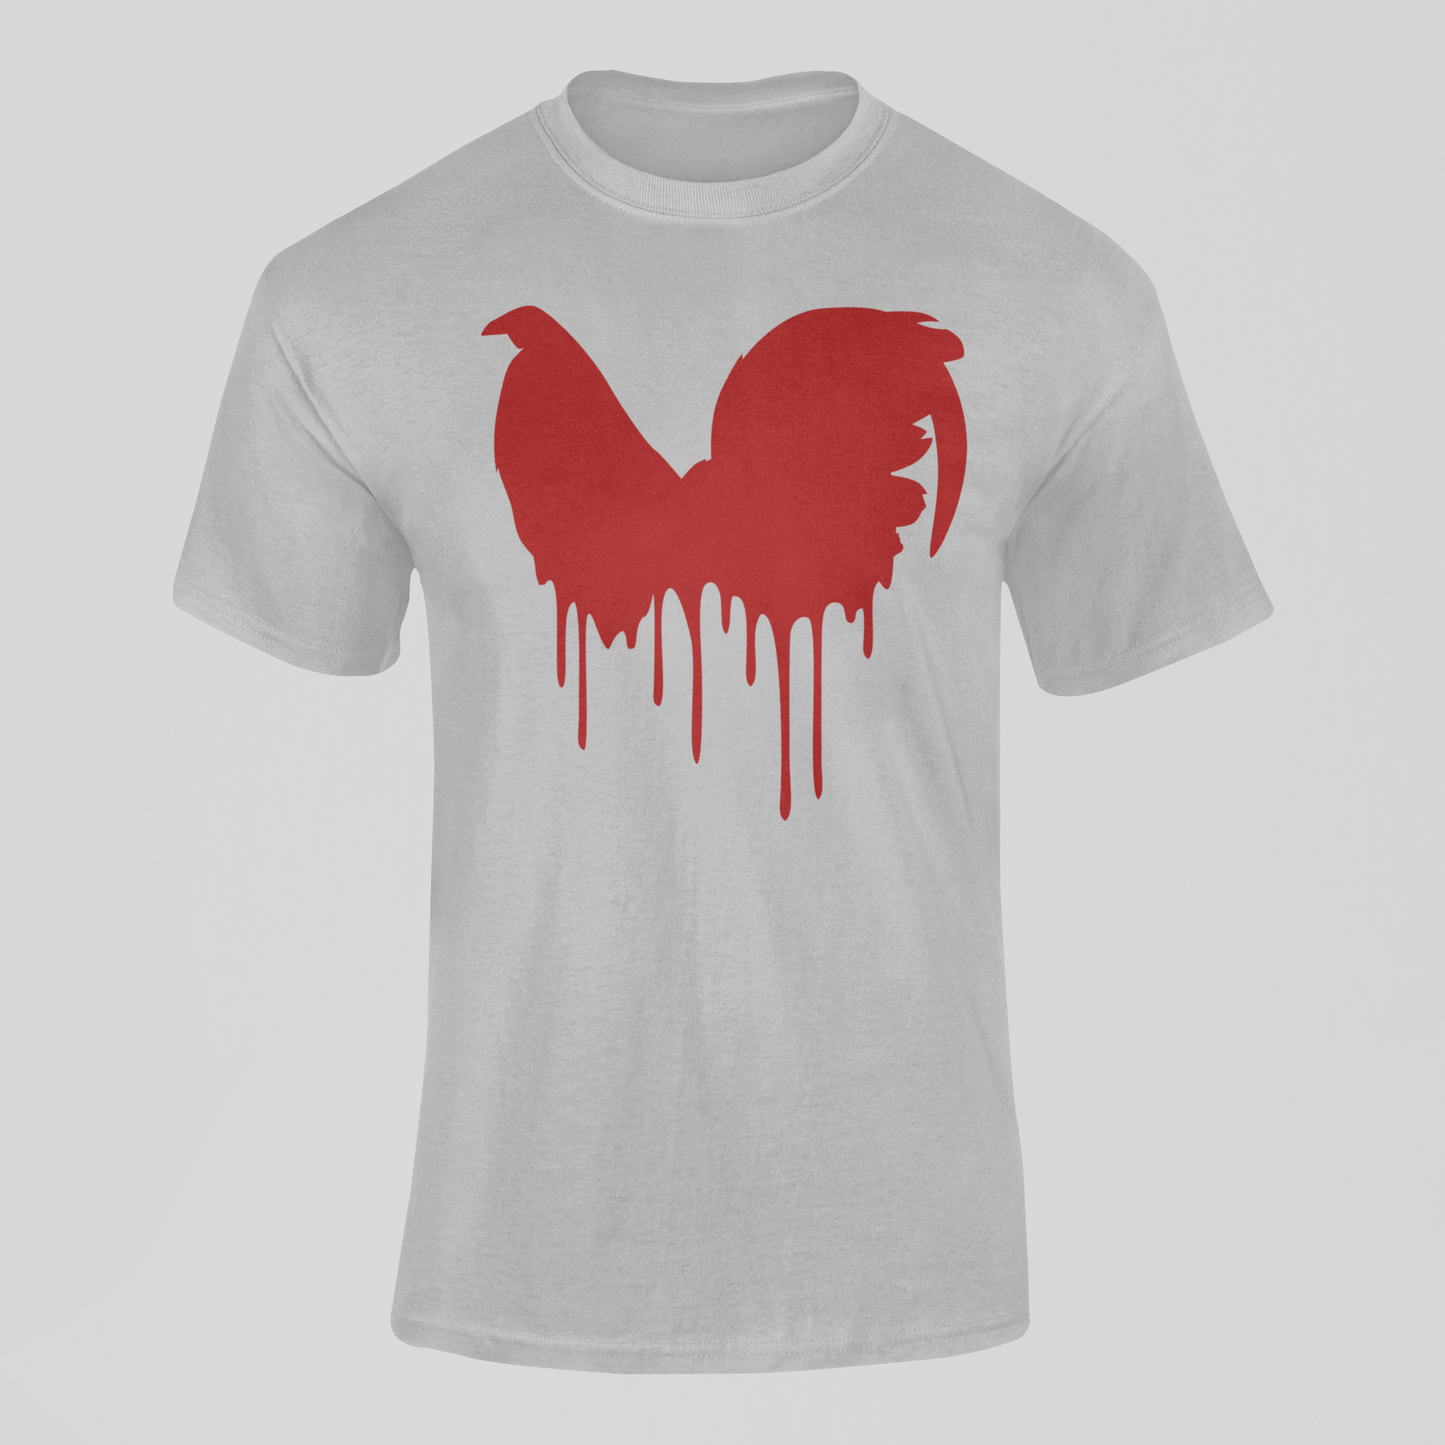 Blood Gamecock Cockfighting T-Shirt